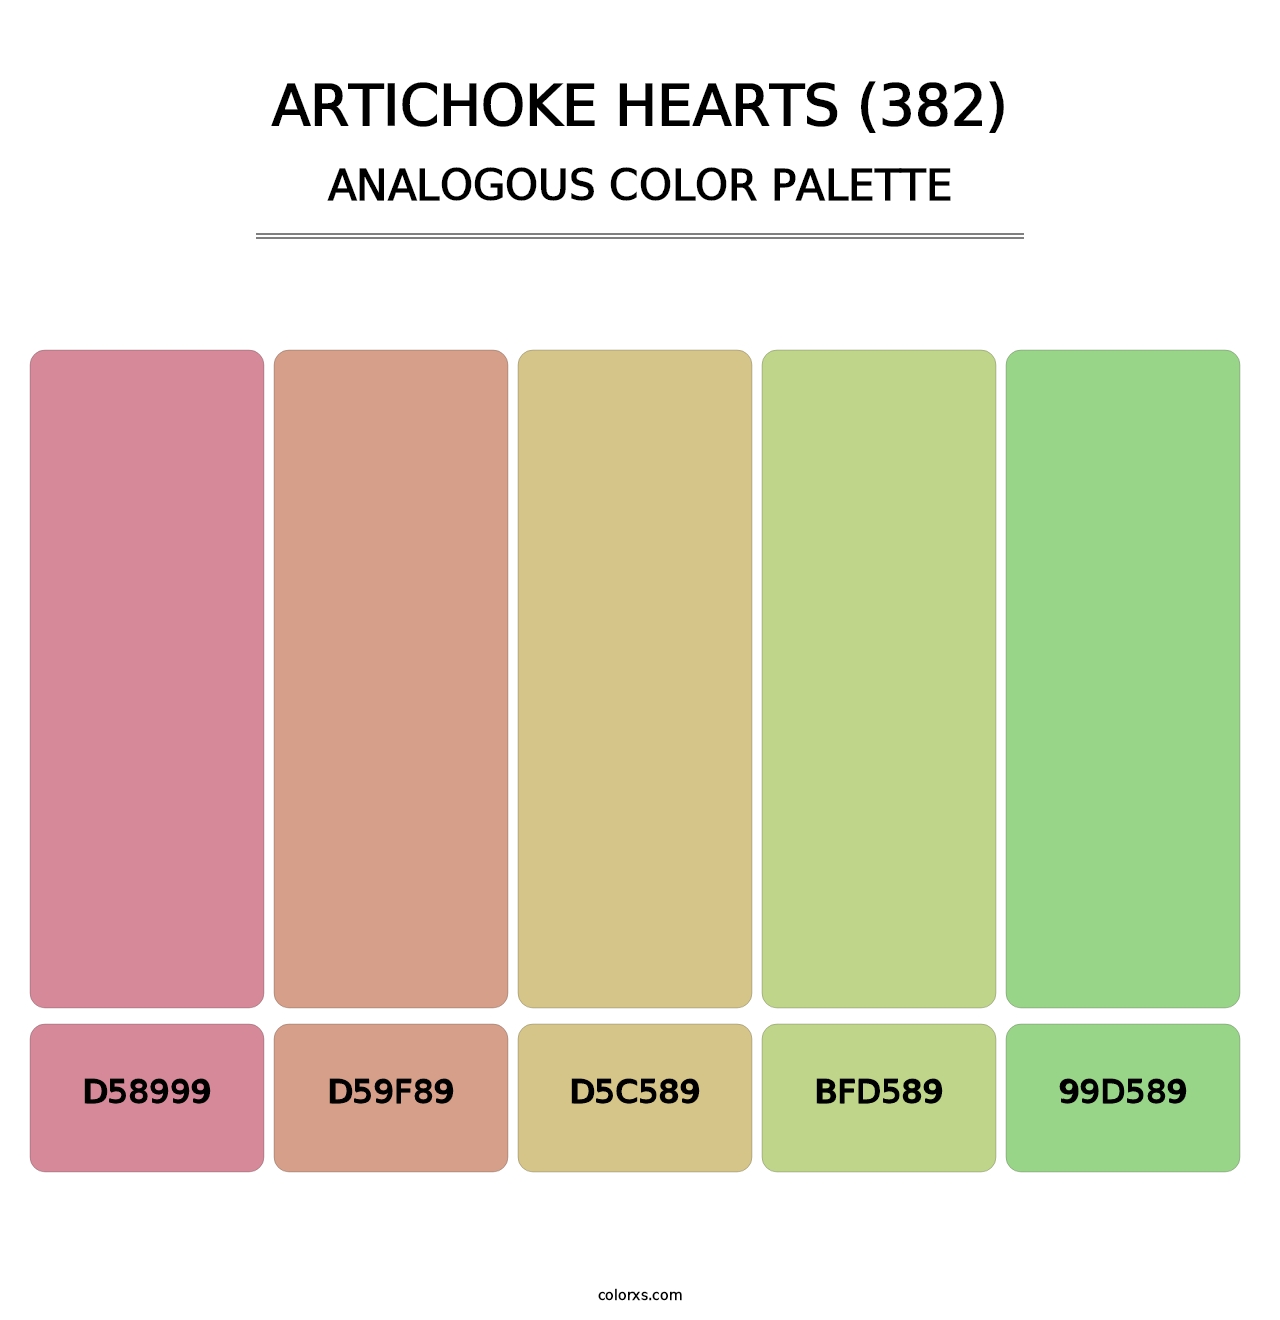 Artichoke Hearts (382) - Analogous Color Palette